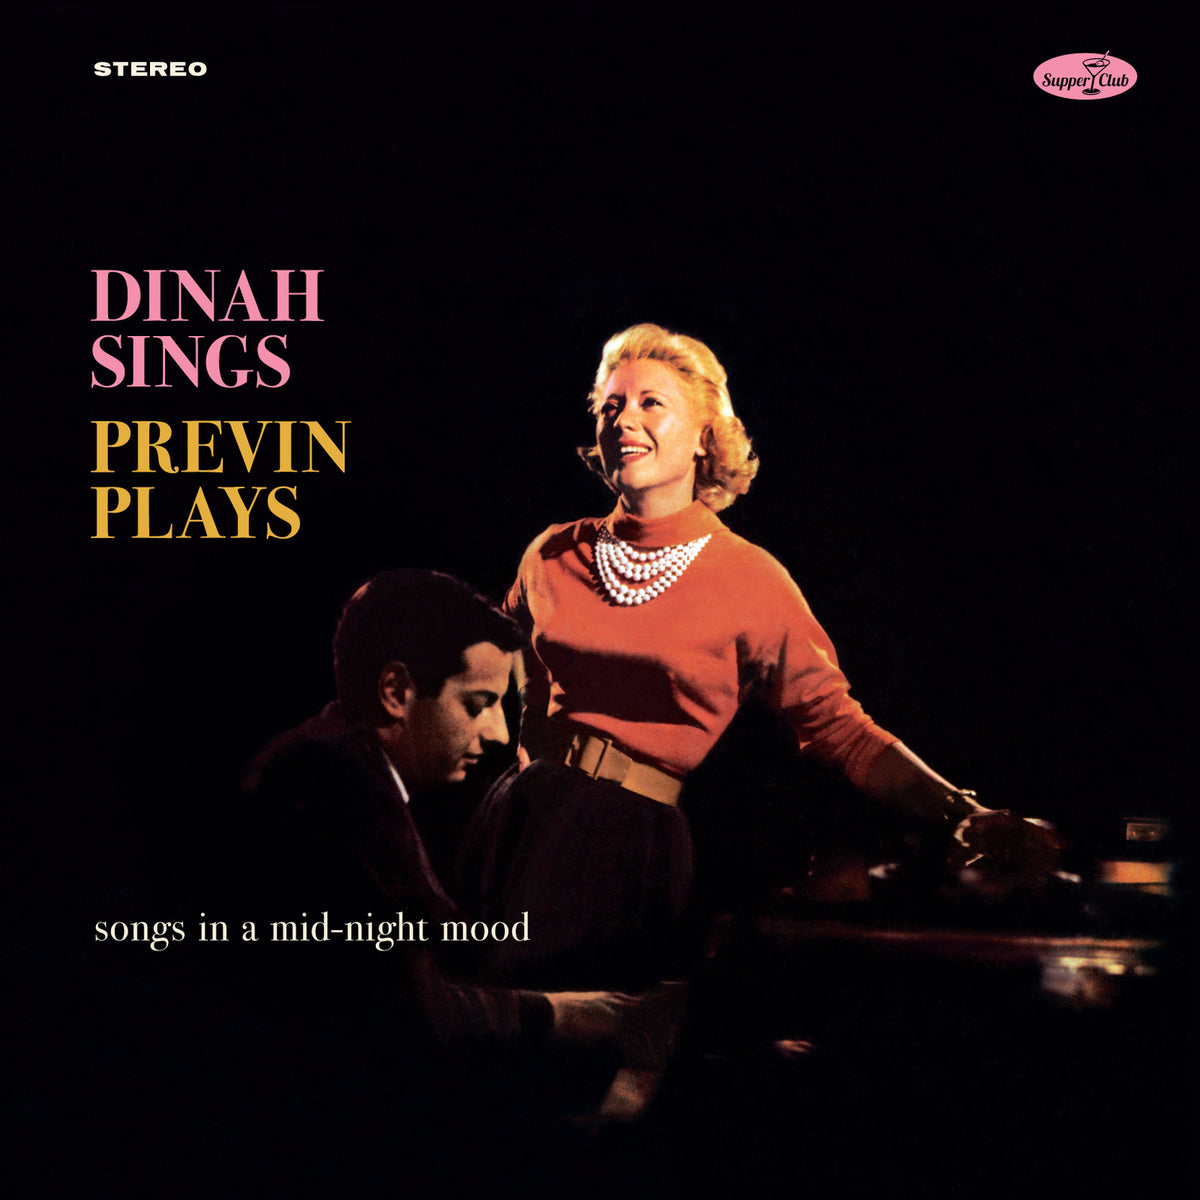 Dinah Shore - Dinah Sings - Previn Plays - 035SP